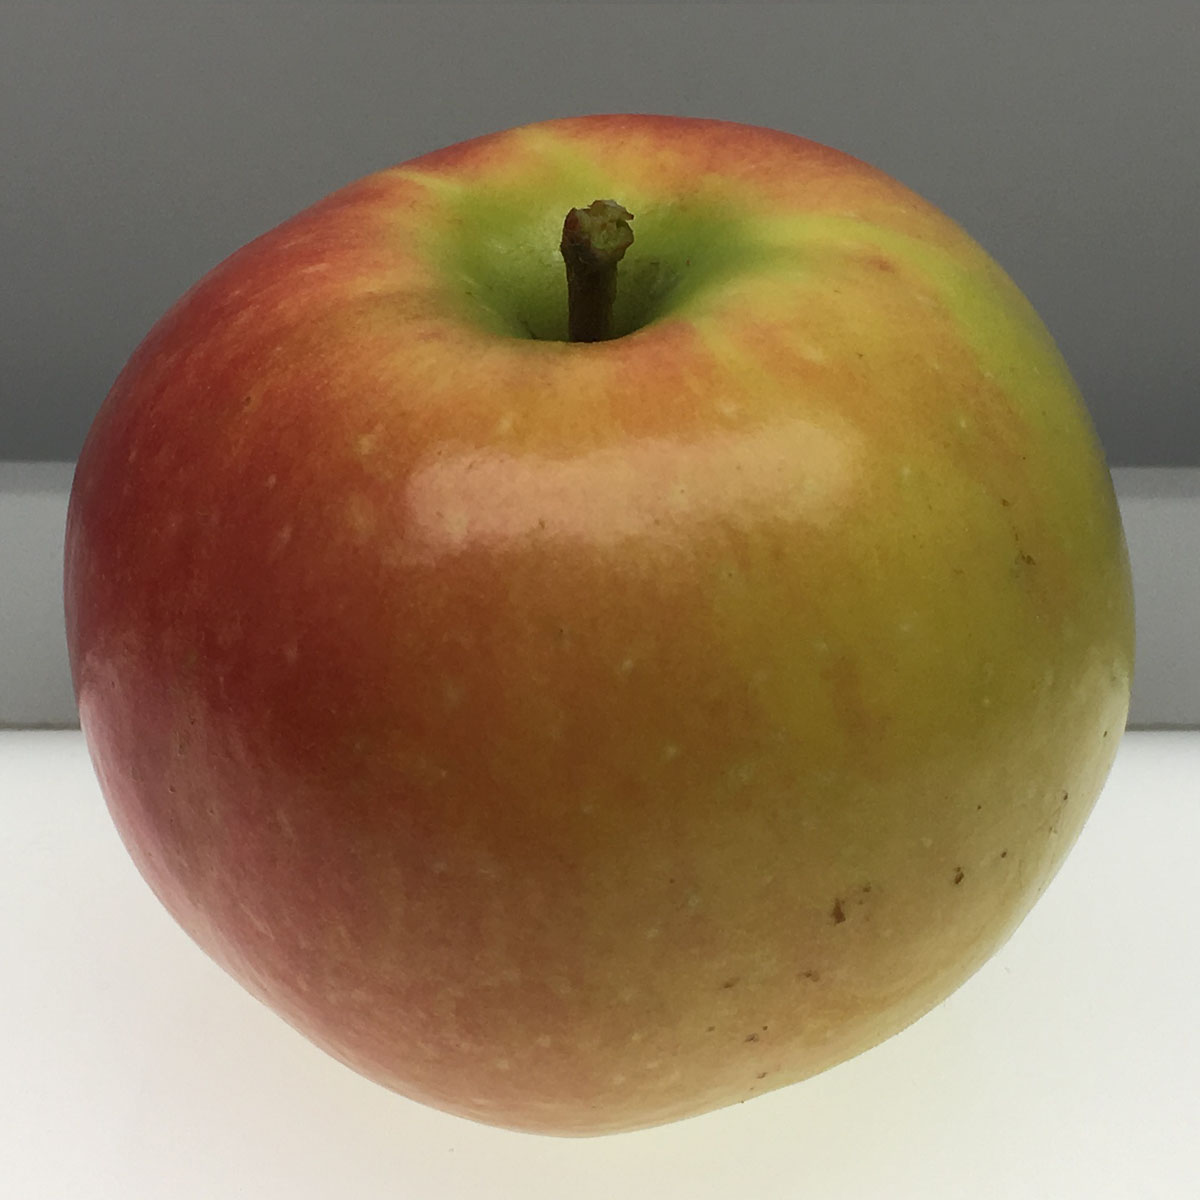 Rhode Island Greening apple